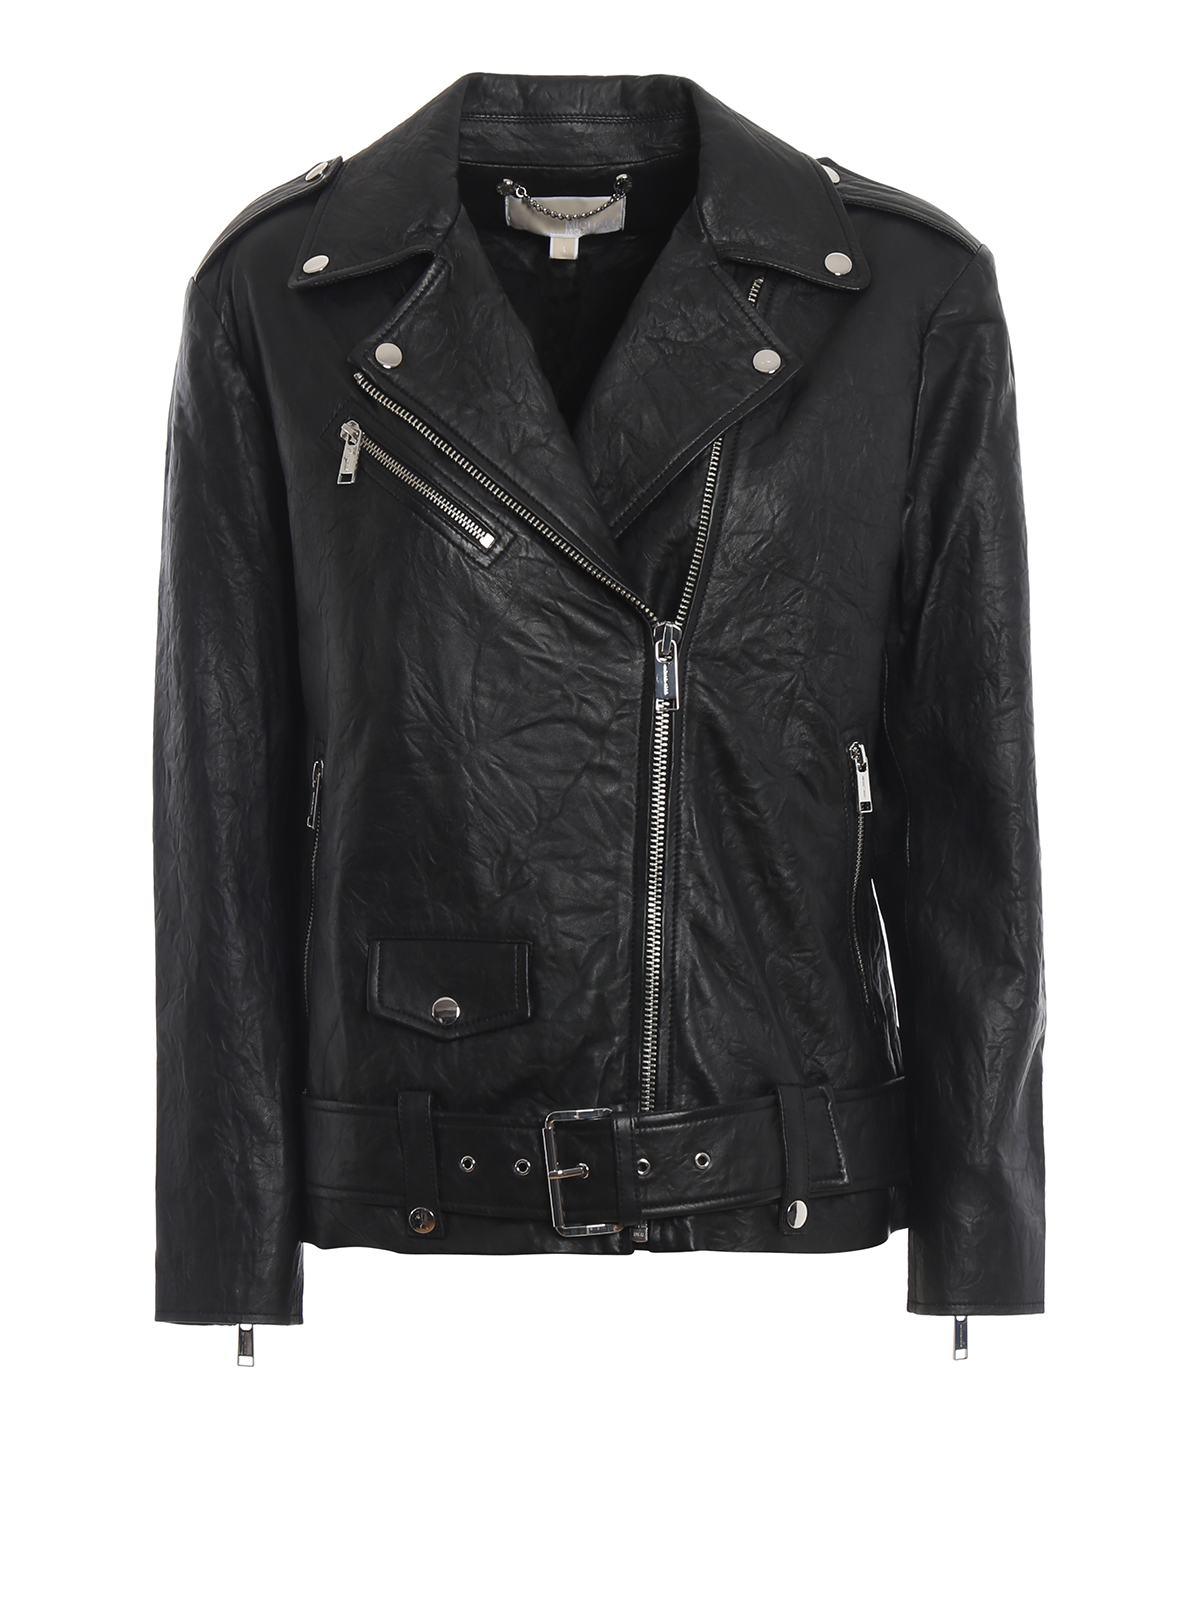 Leather jacket Michael Kors - Black nappa leather moto jacket -  MU92J0K2A3001